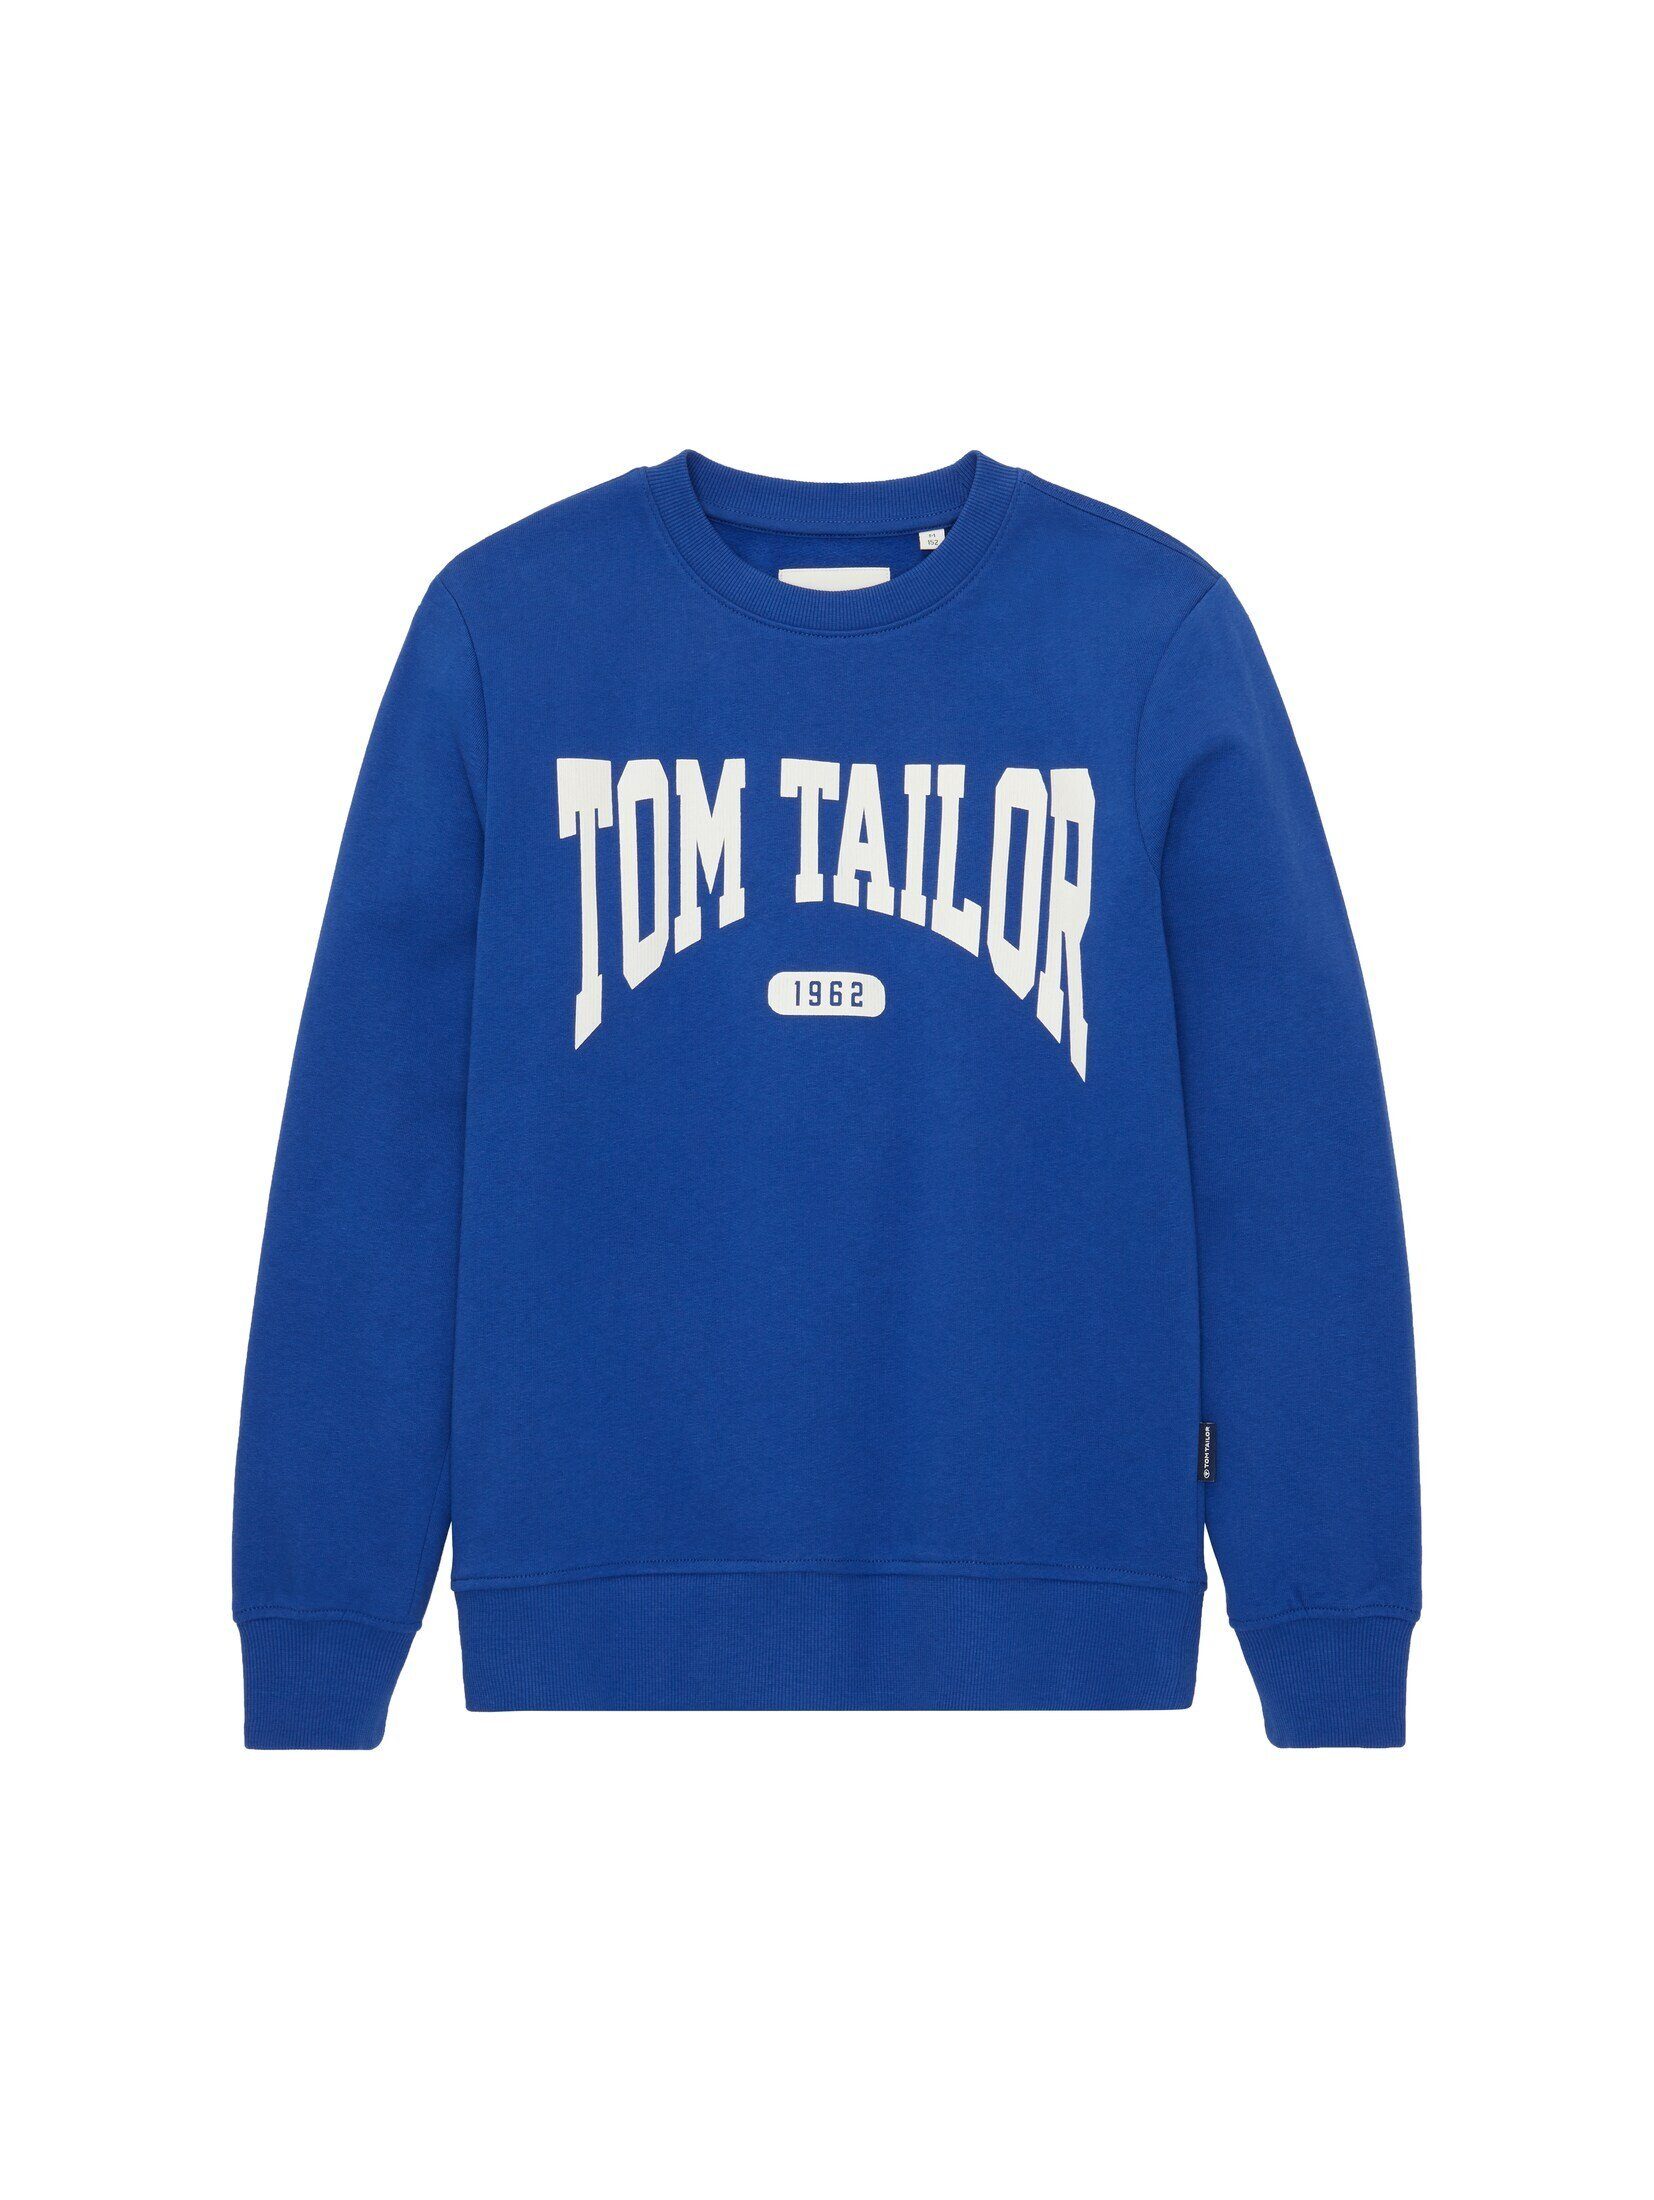 TOM TAILOR Hoodie Sweatshirt mit Logo Print shiny royal blue